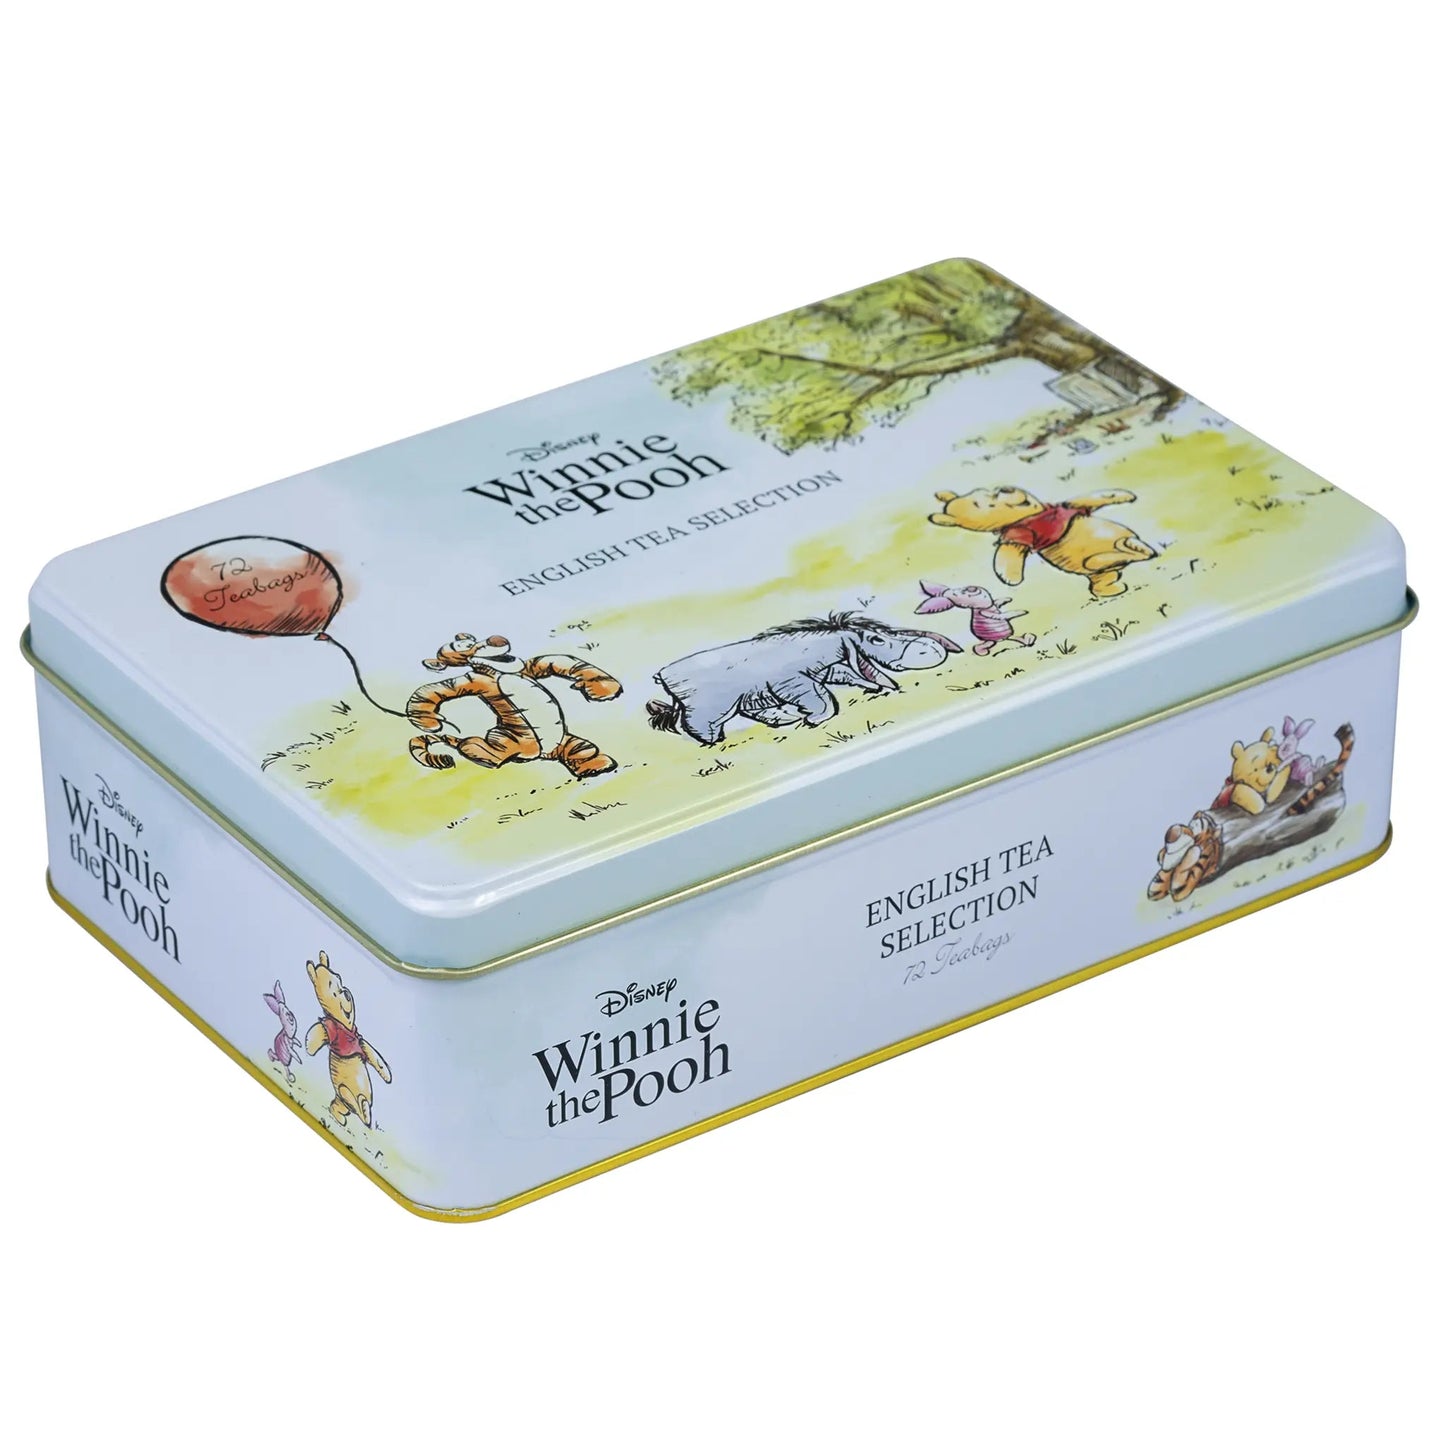 Winnie The Pooh Tea Selection Tin Tea Tins New English Teas 